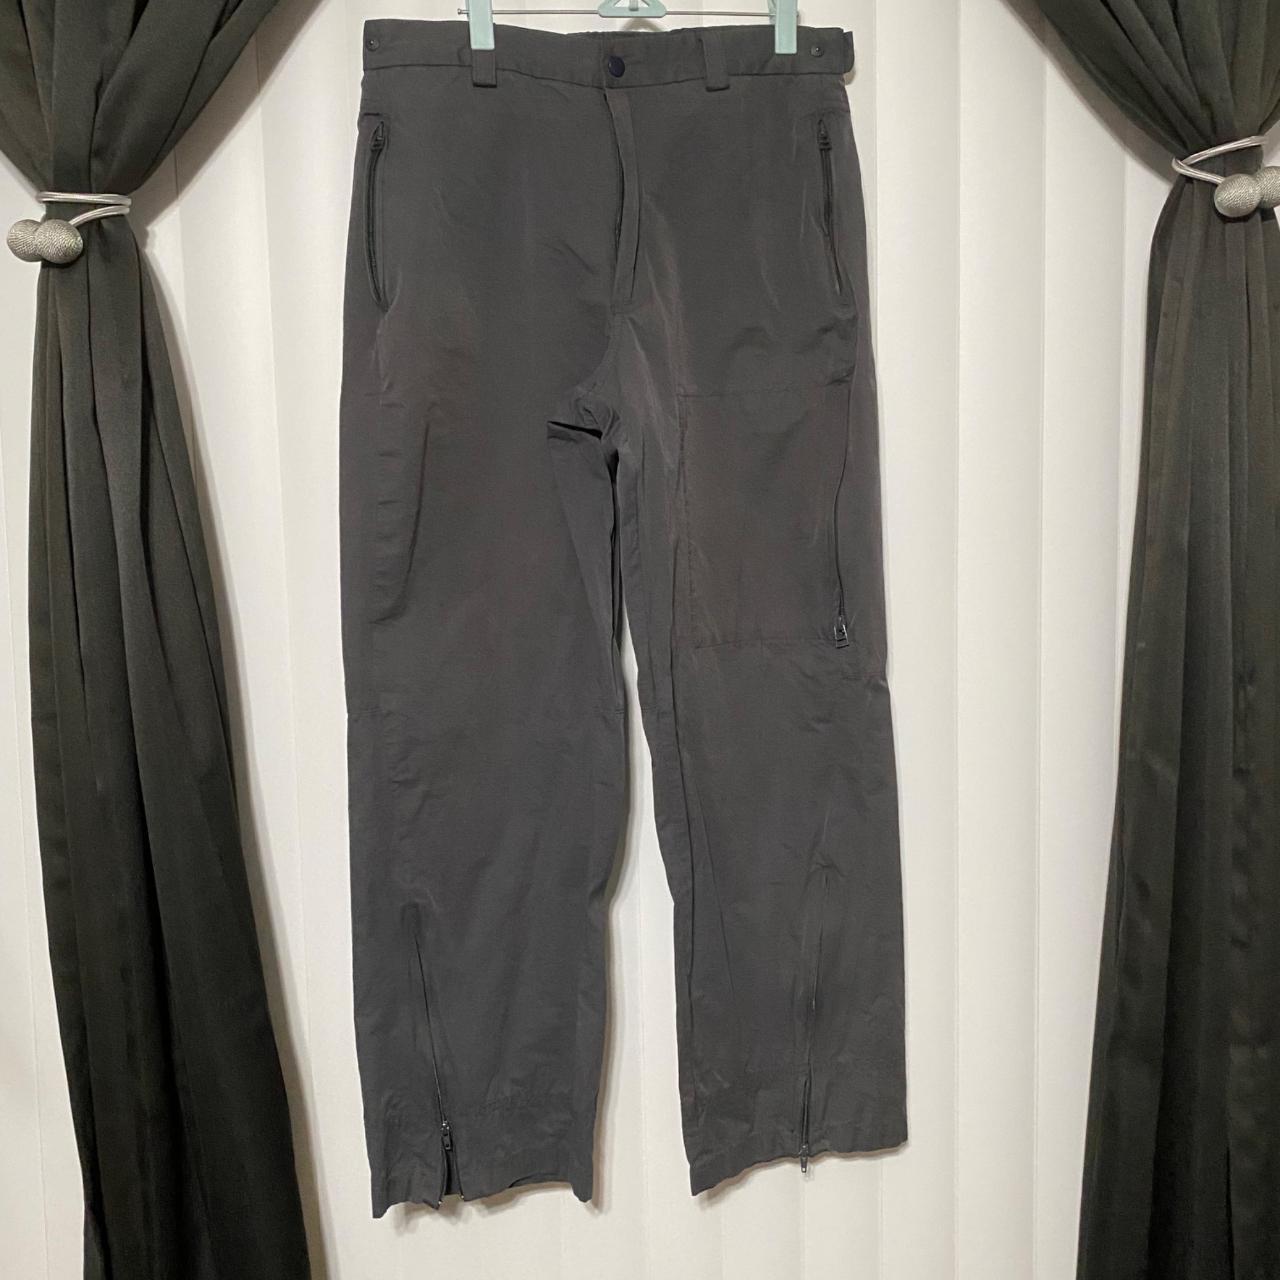 Gap khaki grey pants like cargo style with xtra... - Depop